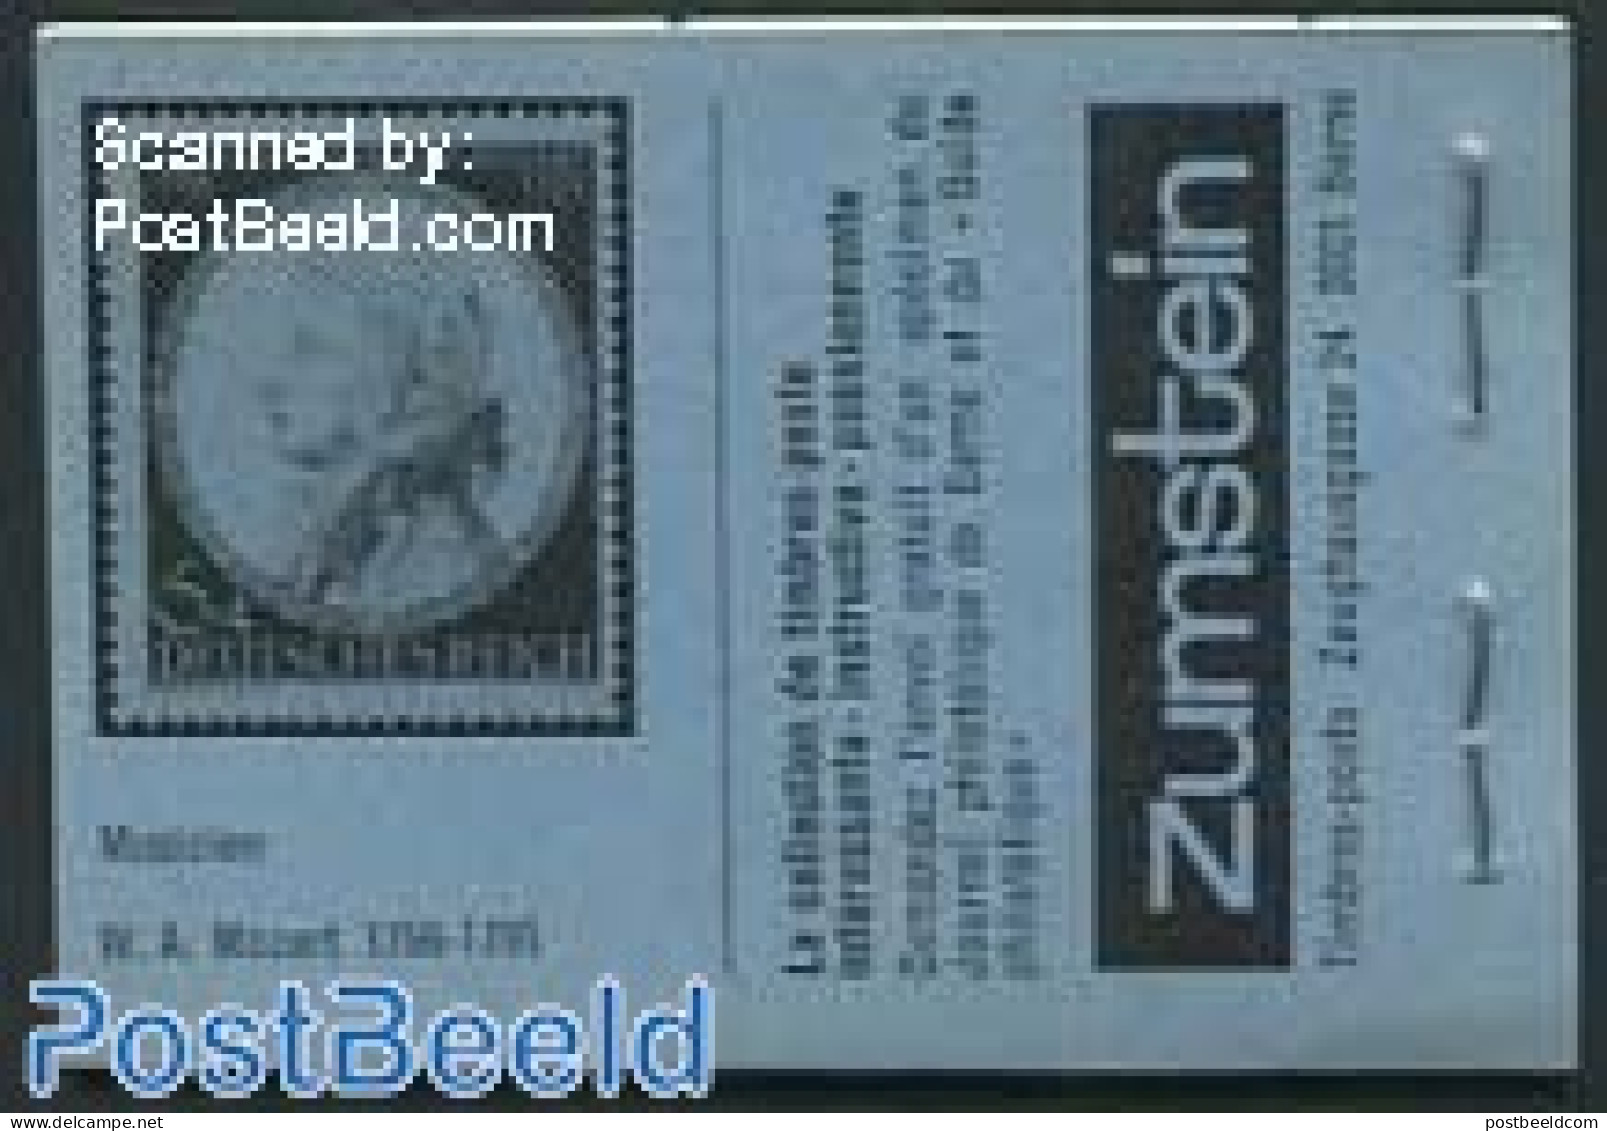 Switzerland 1980 Folklore Booklet, Blue Cover, Mozart F, Mint NH, Performance Art - Various - Amadeus Mozart - Stamp B.. - Neufs